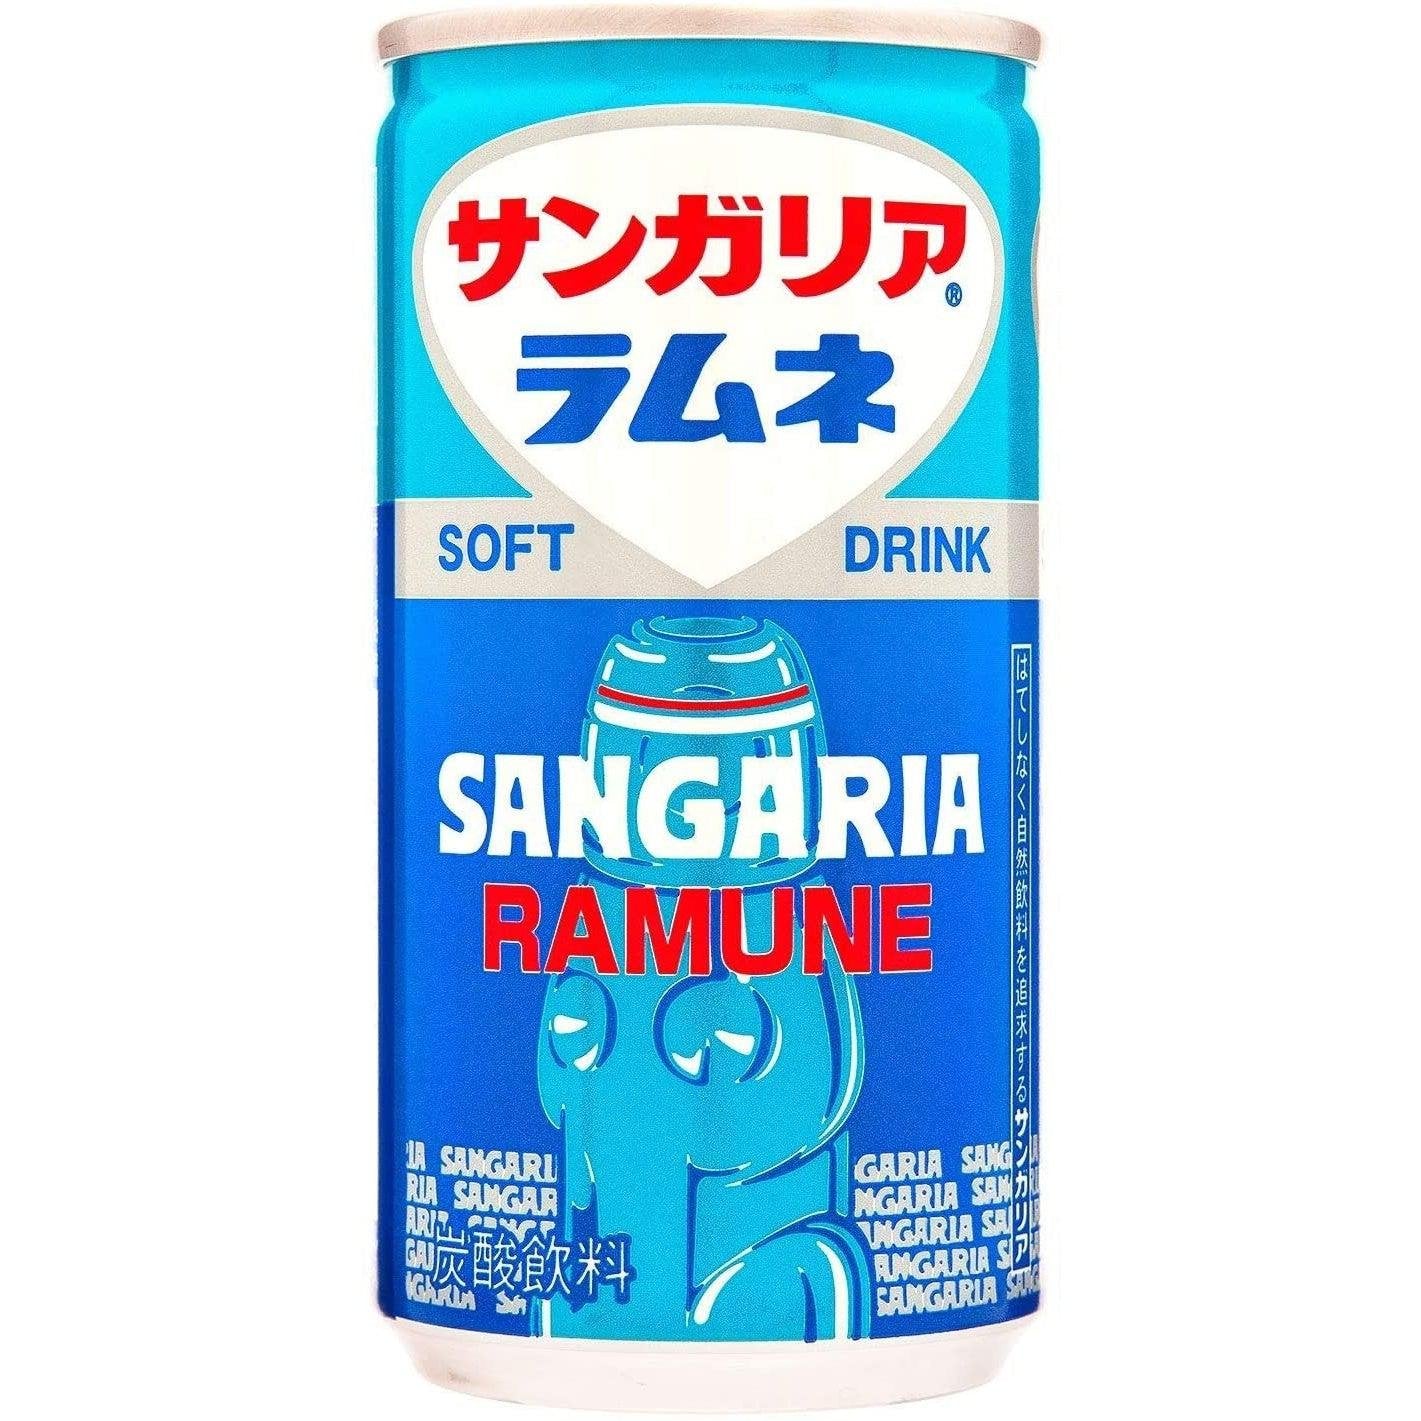 Sangaria Ramune Soda Japanese Soda Pop Drink 190g